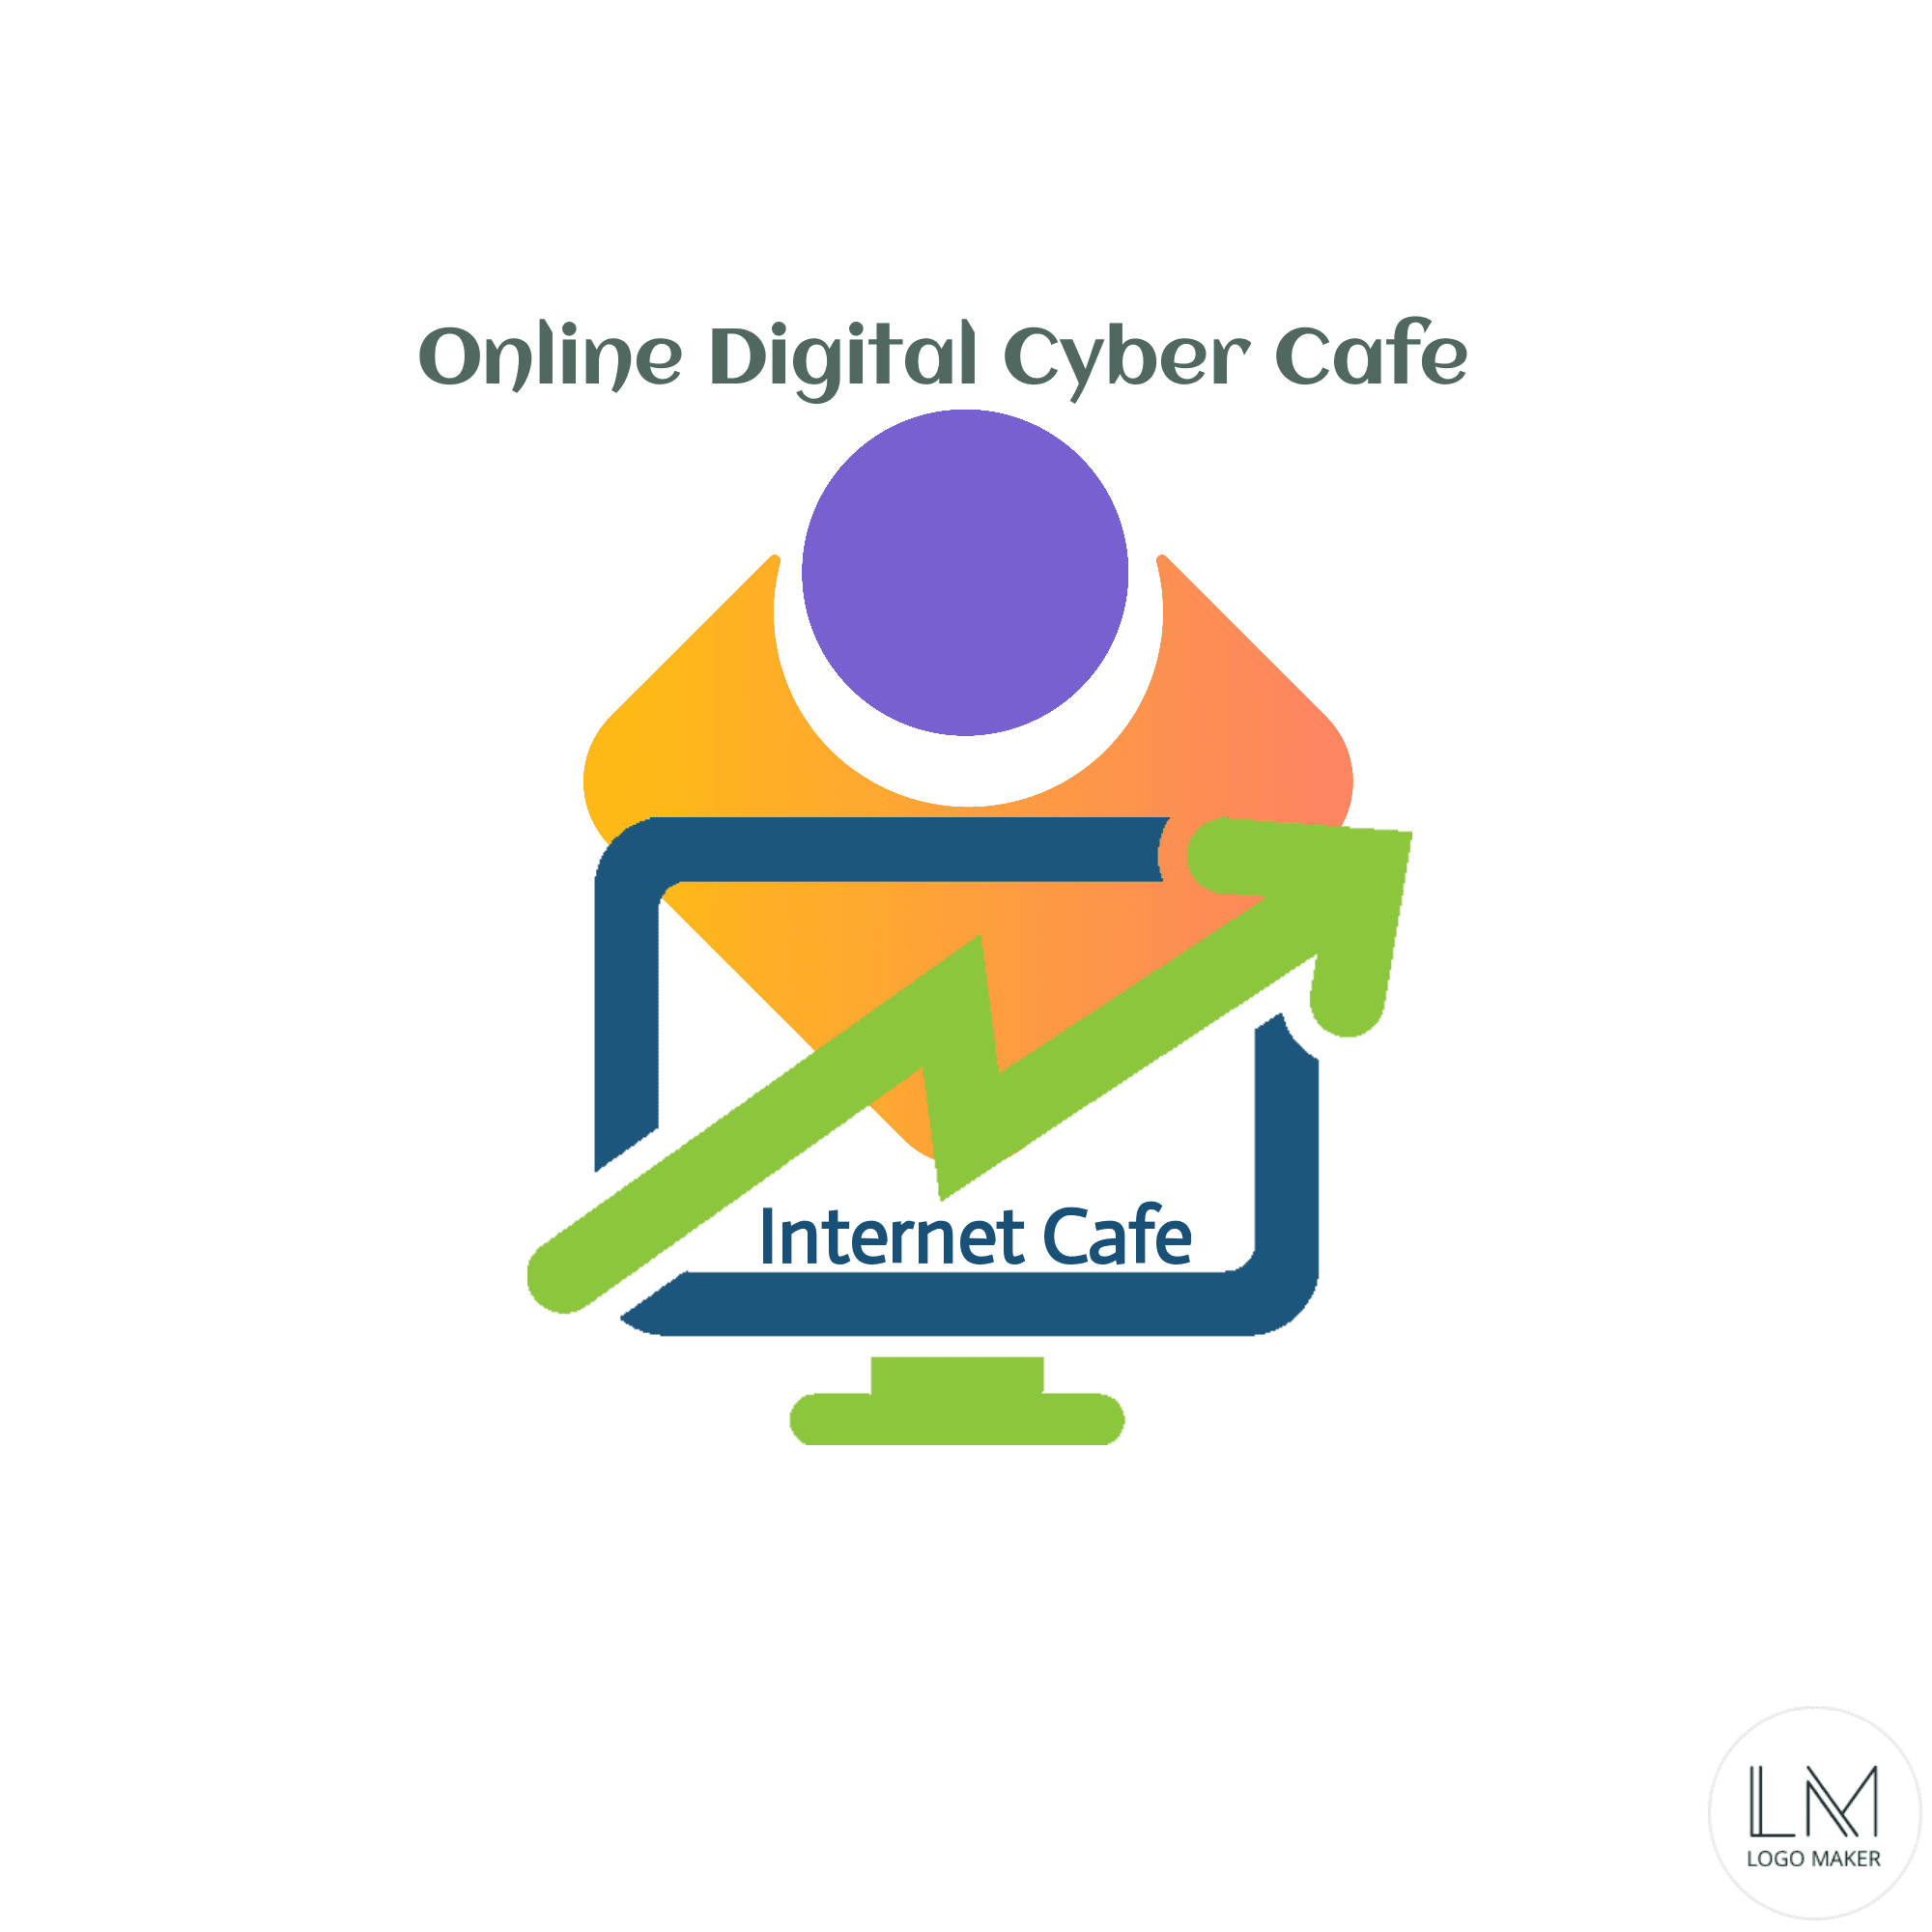 internet cafe logos and names